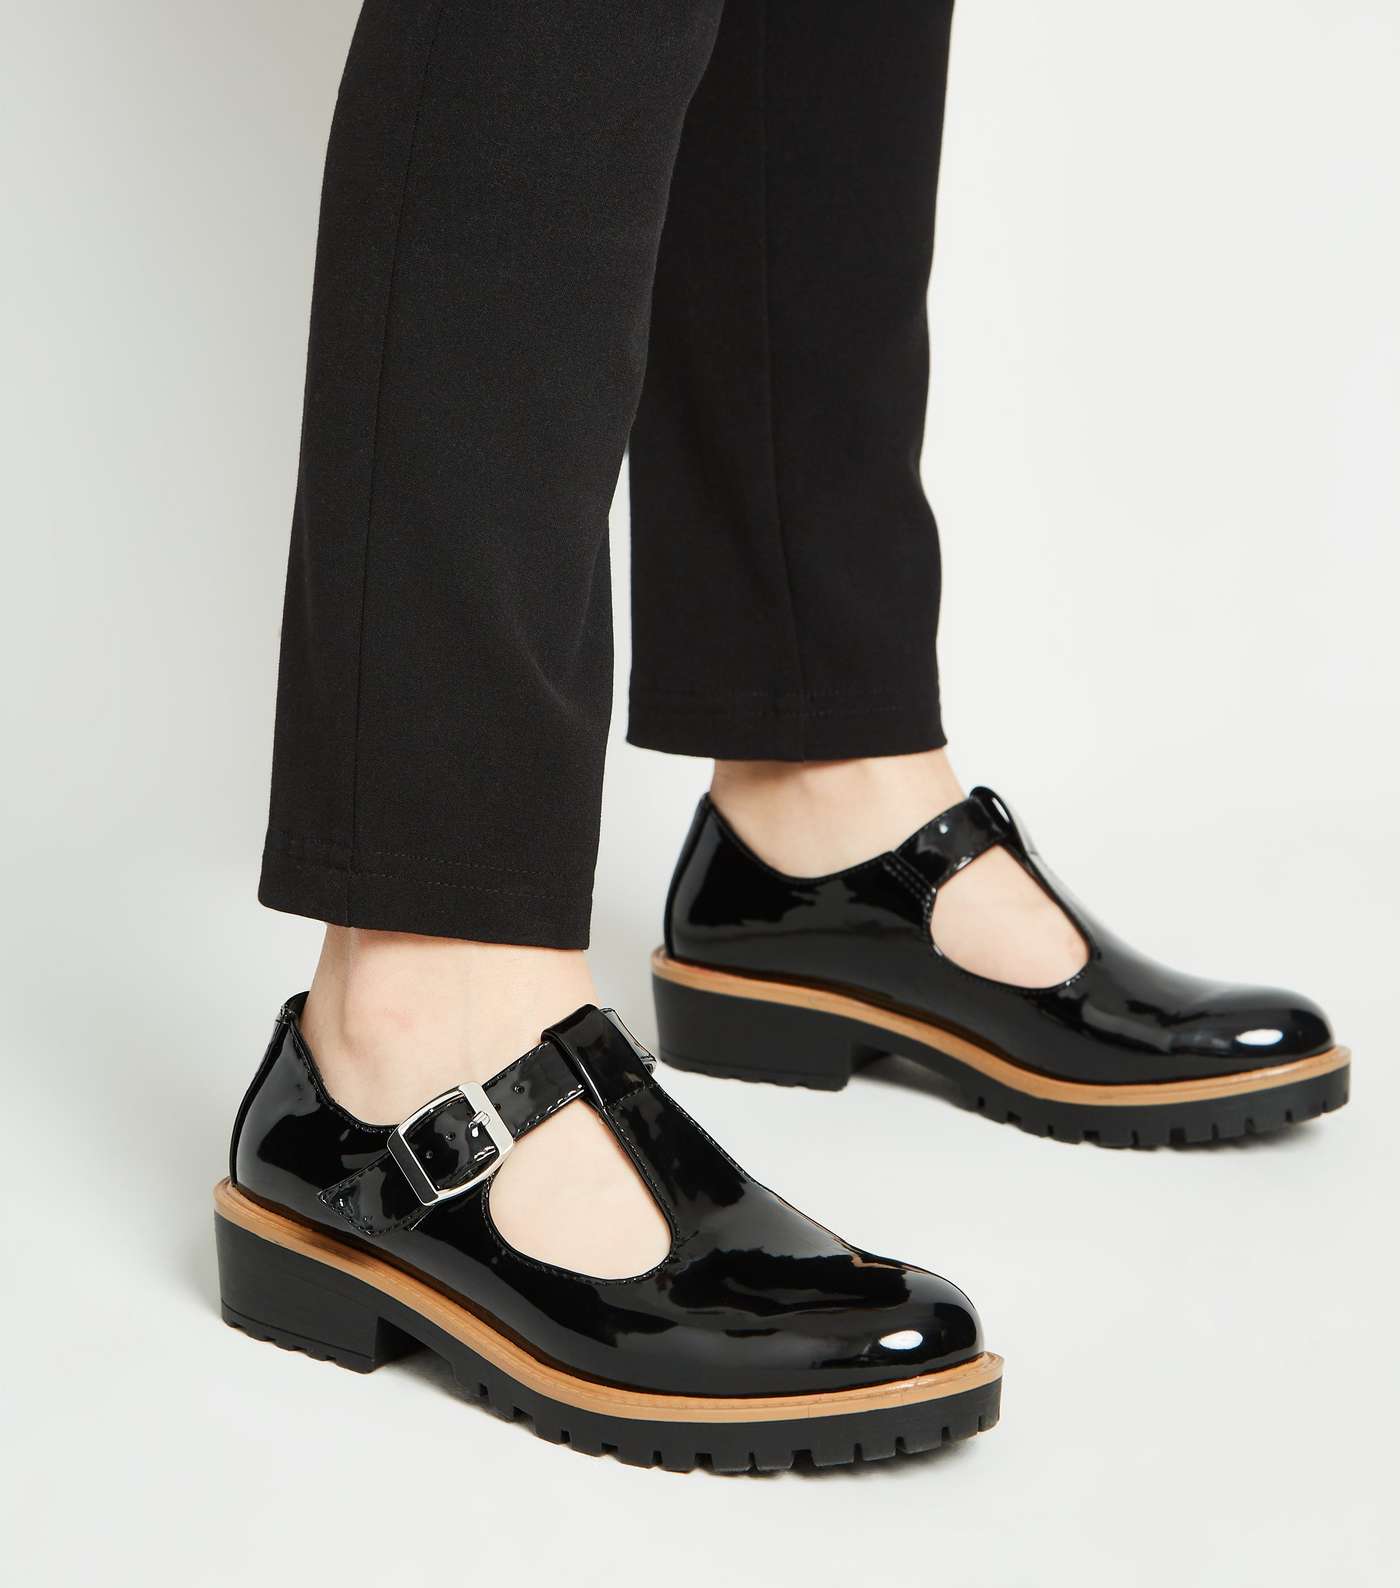 Girls Black Patent T-Bar Shoes Image 2